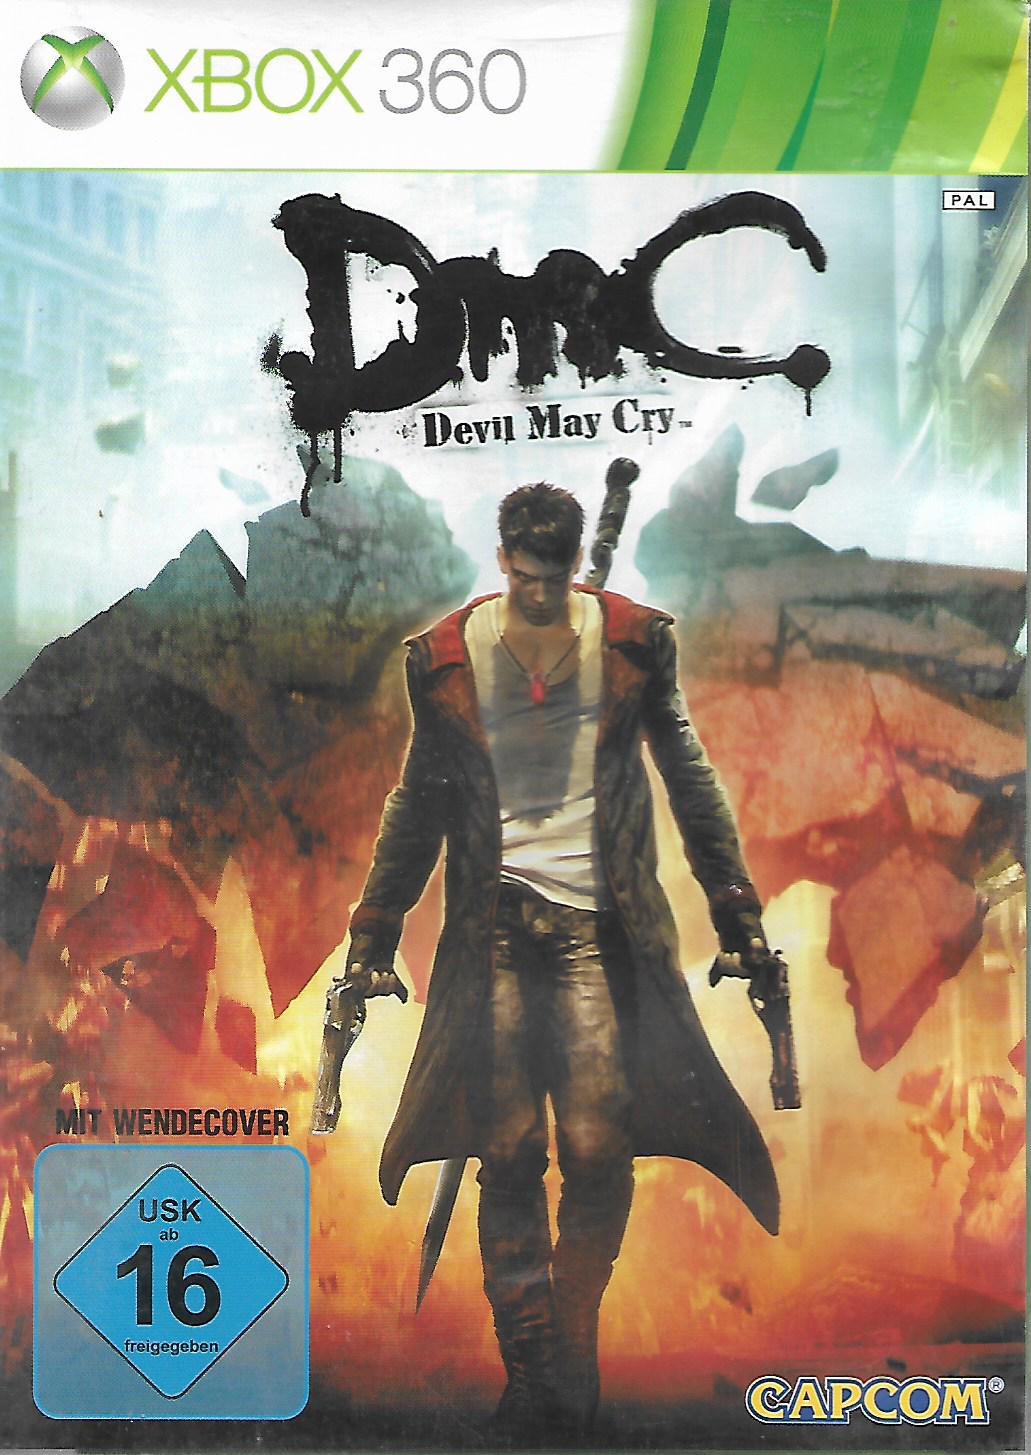 DMC - DEVIL MAY CRY (XBOX 360 - bazar)